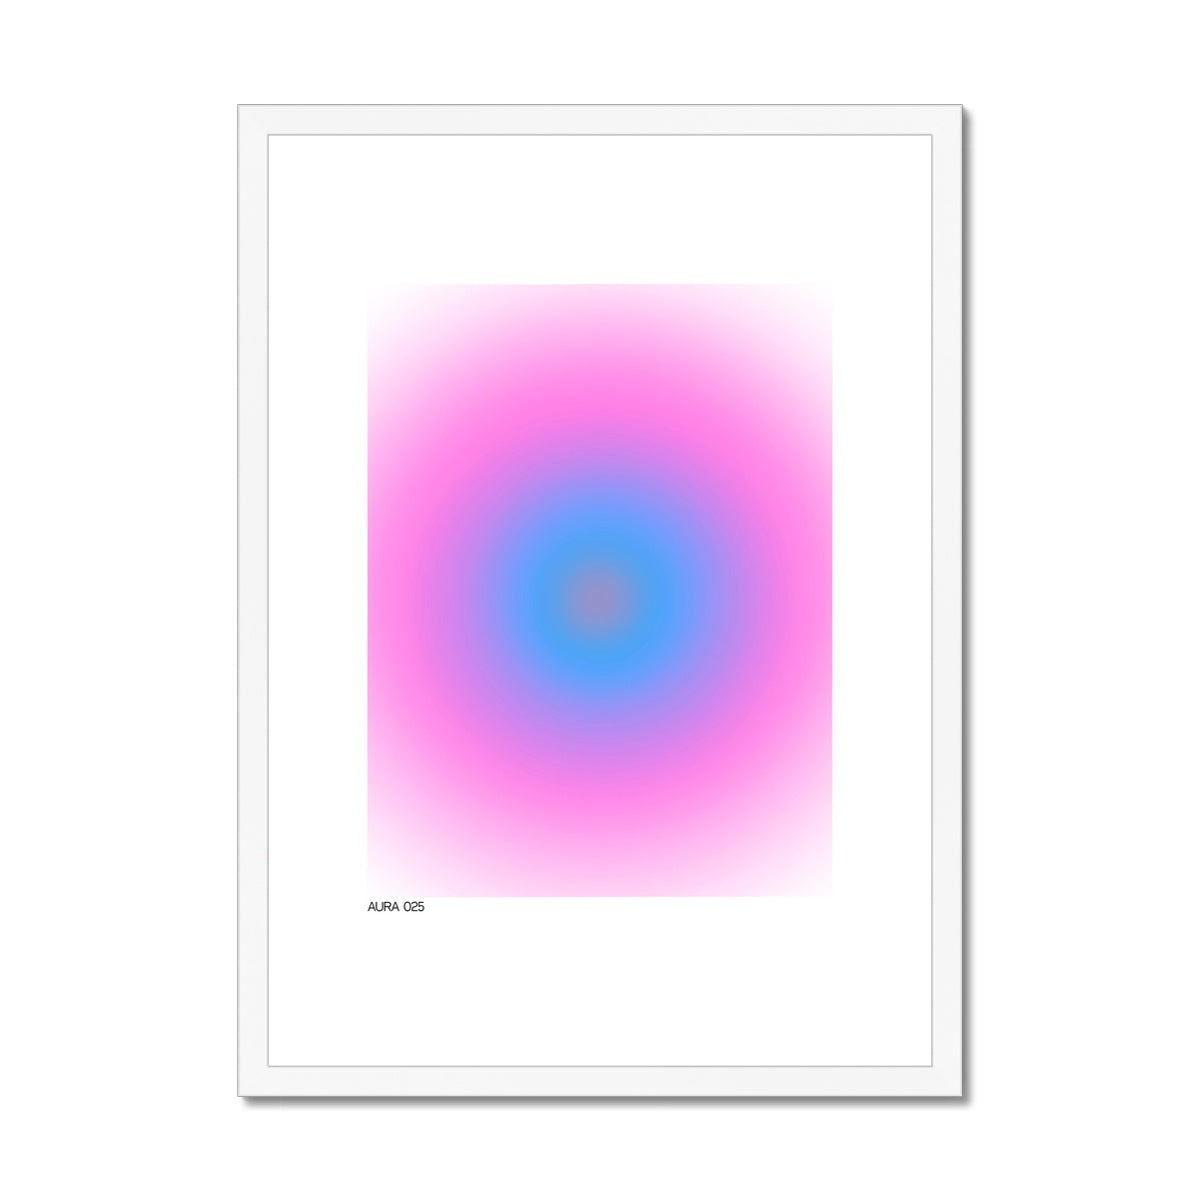 aura 025 Framed & Mounted Print